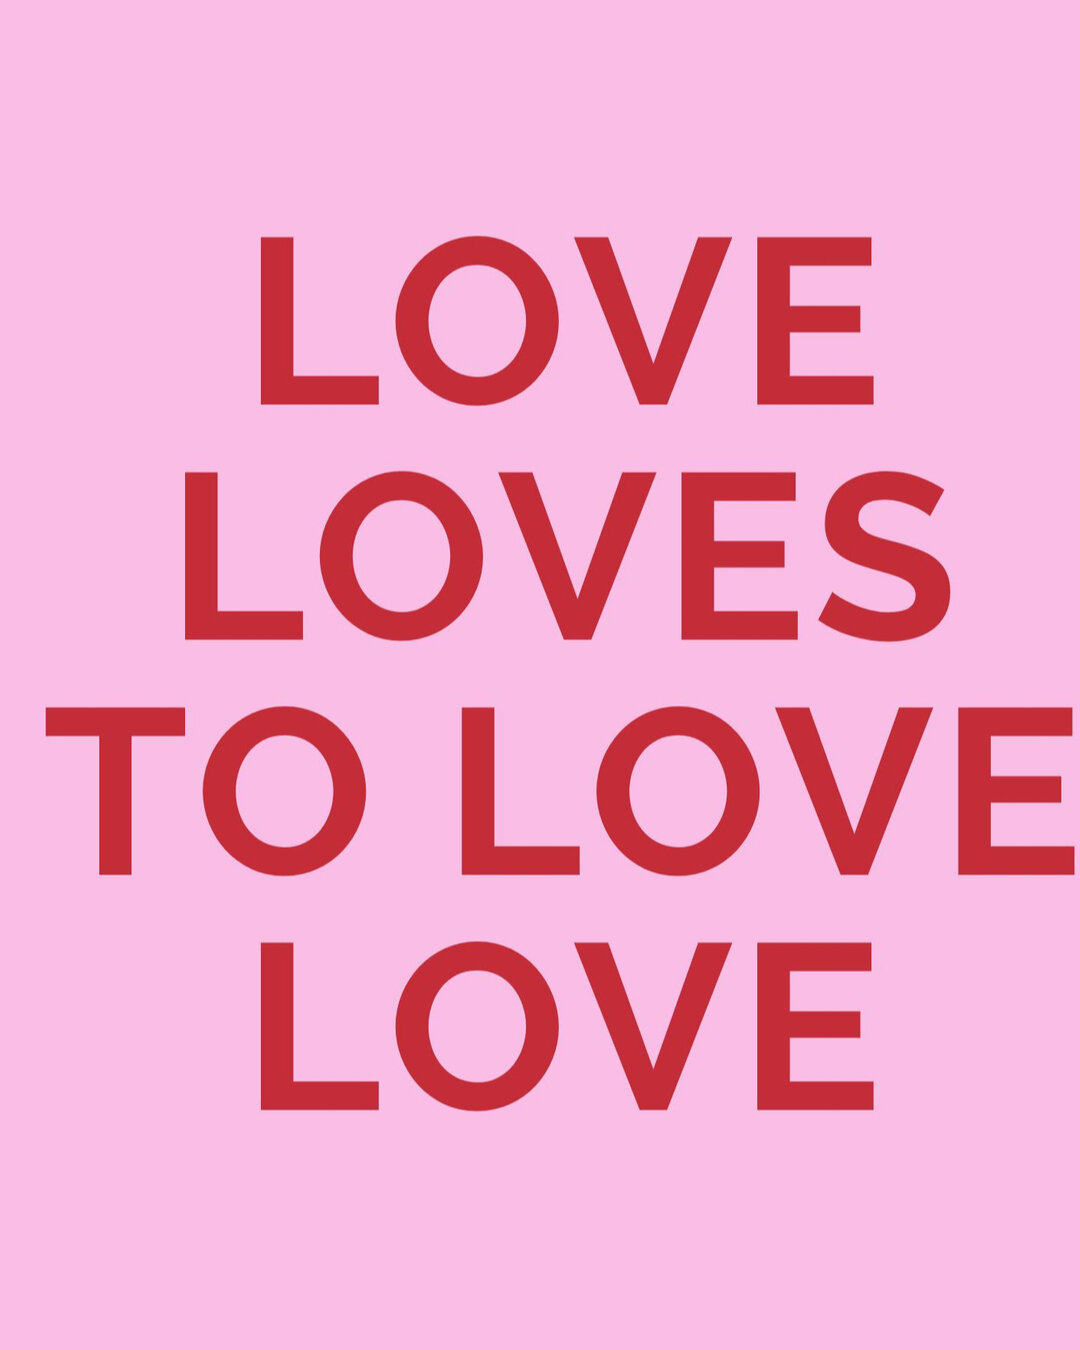 LOVE IS LOVE 💘 ⁣happy weekend!

#halloyoga #love